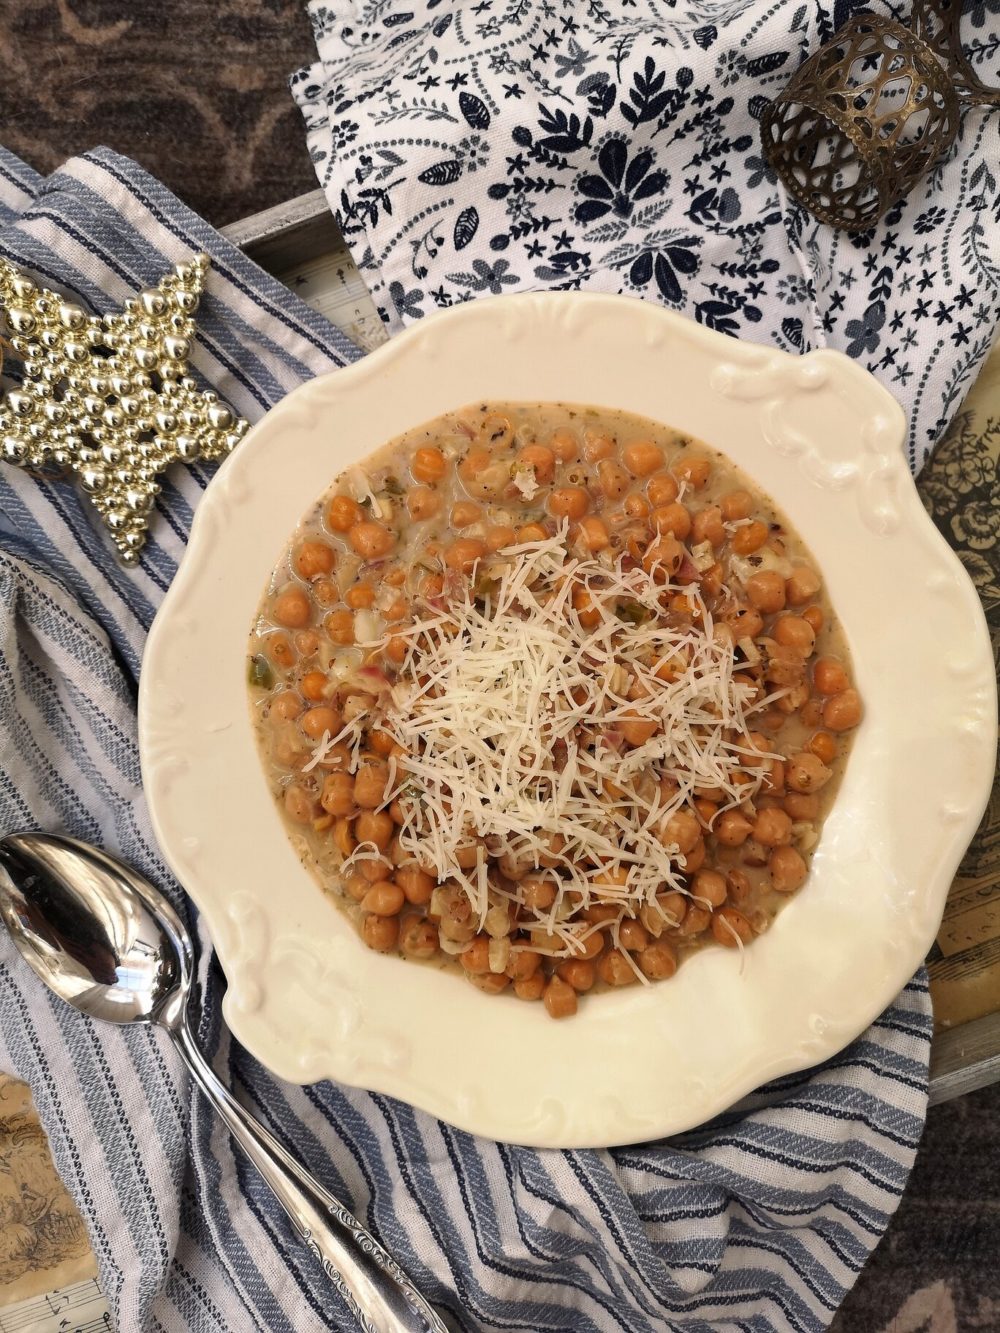 vegan cacio e pepe in a white dish next to decorative towels and a spoon